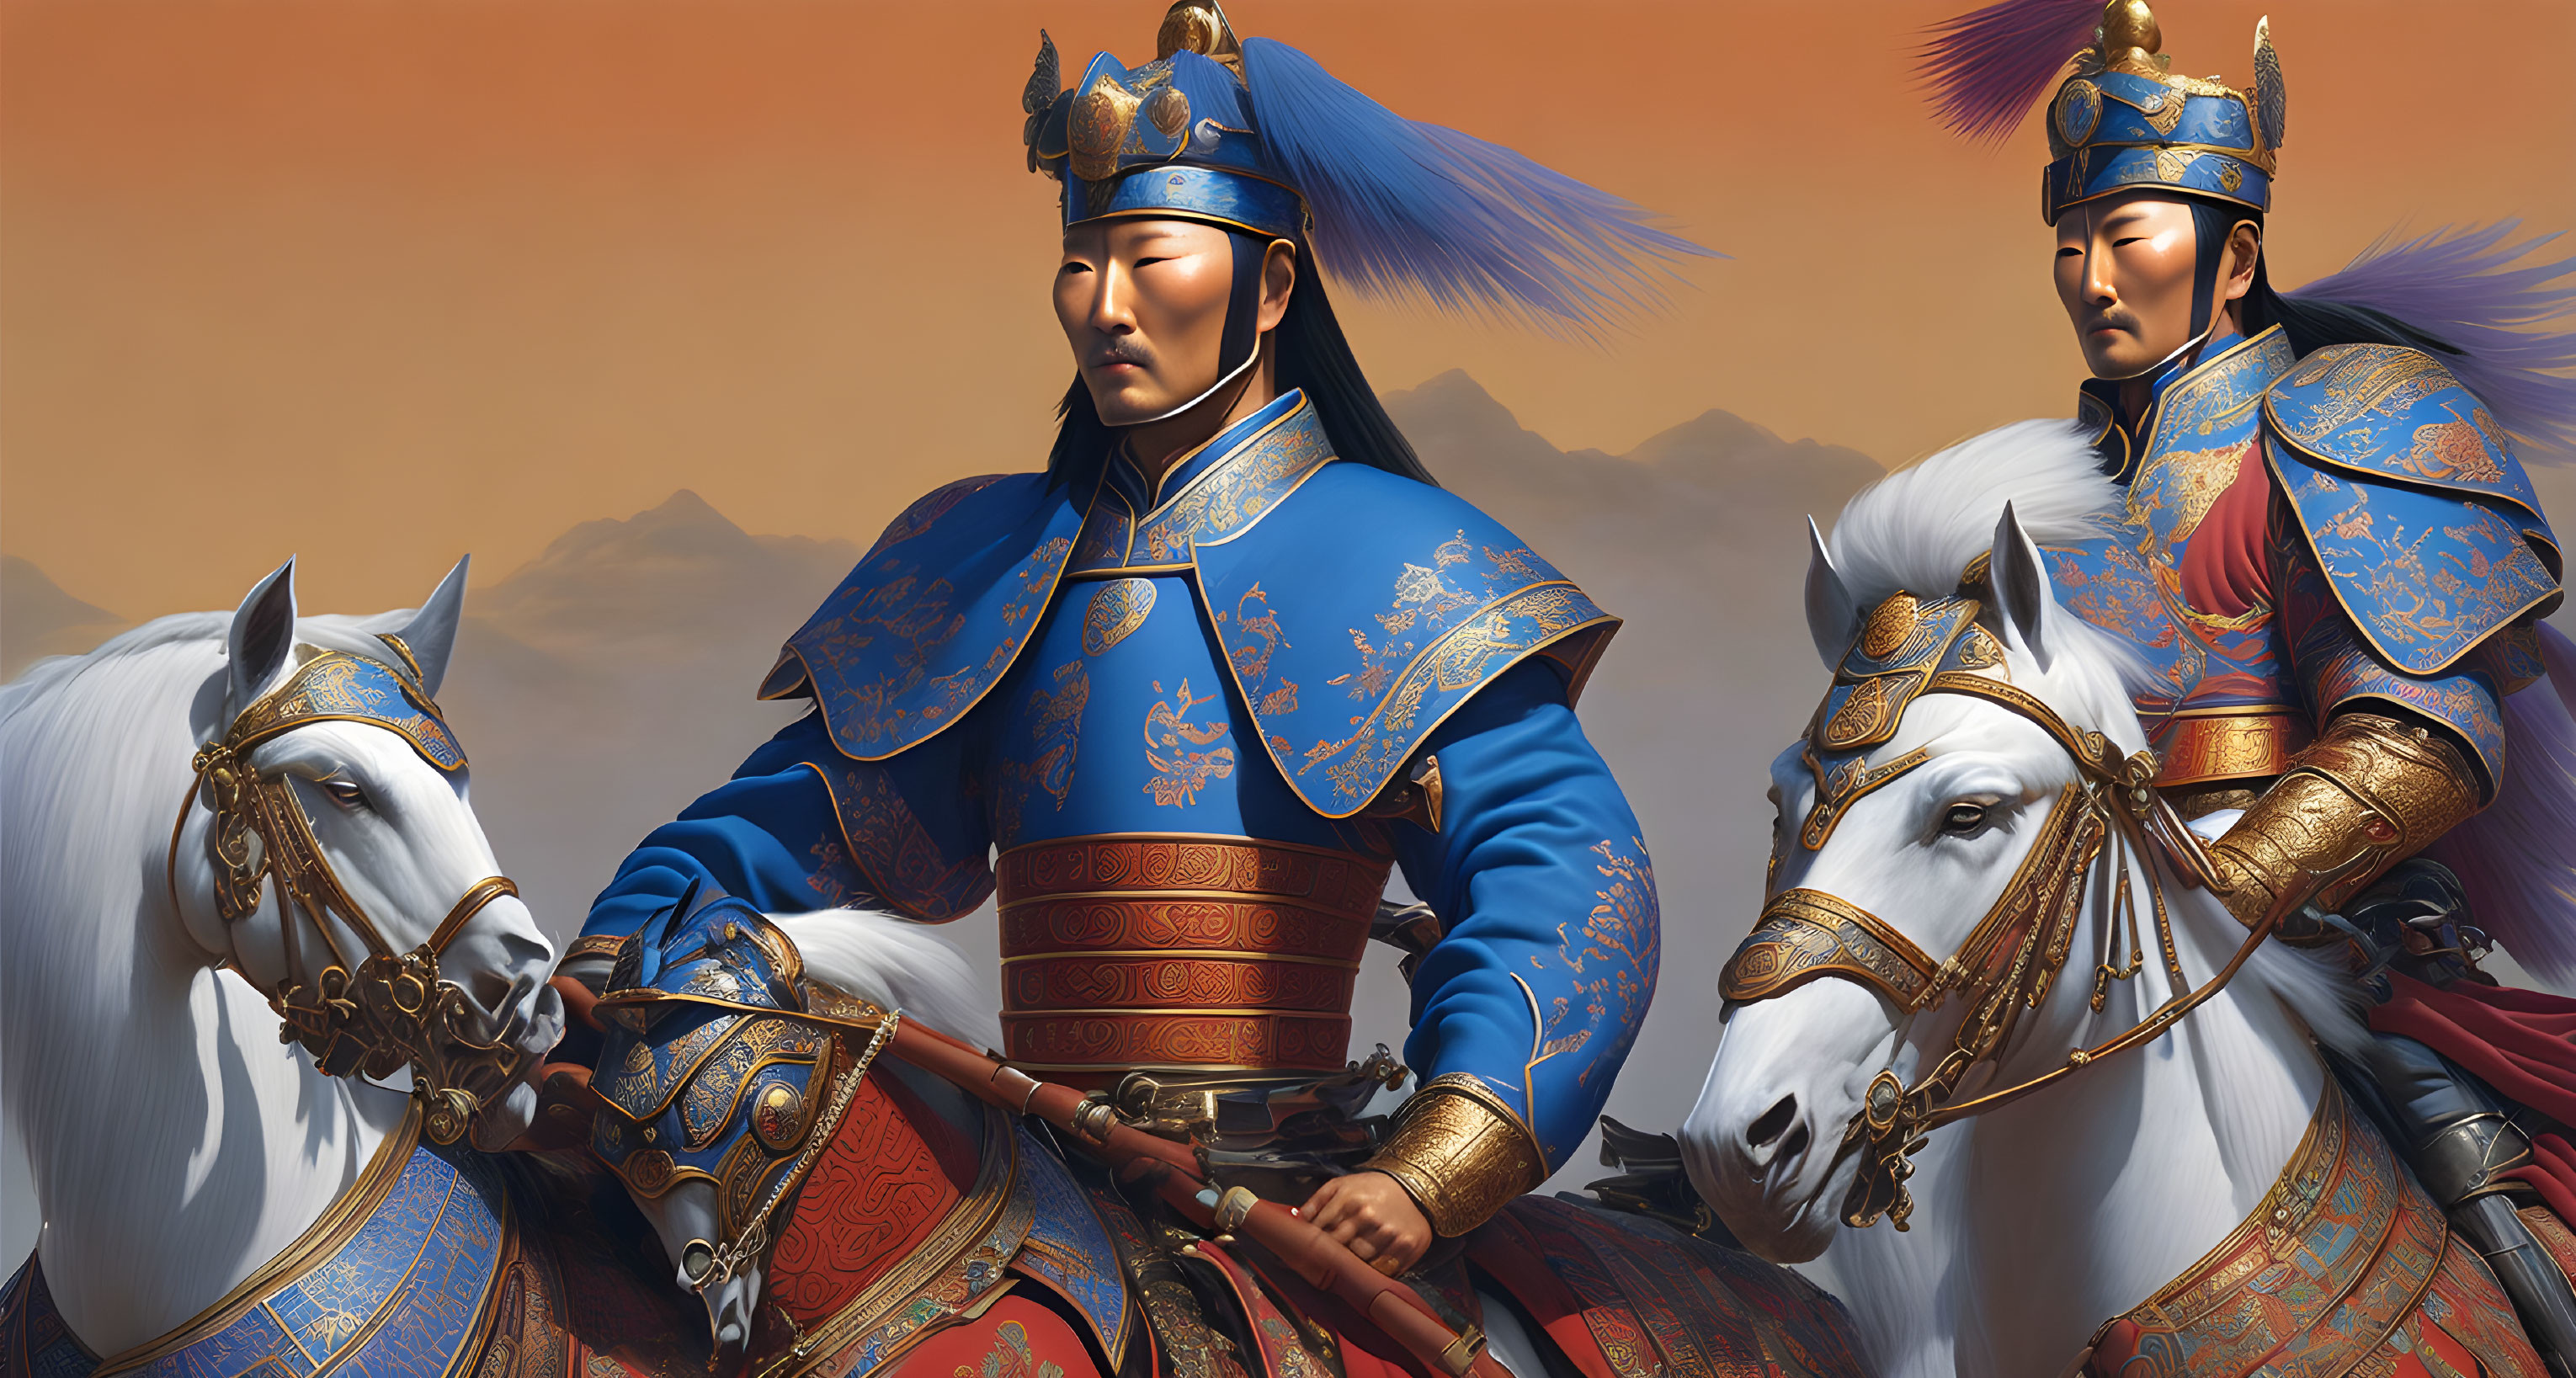 Armored warriors on white horses in blue attire under orange sky